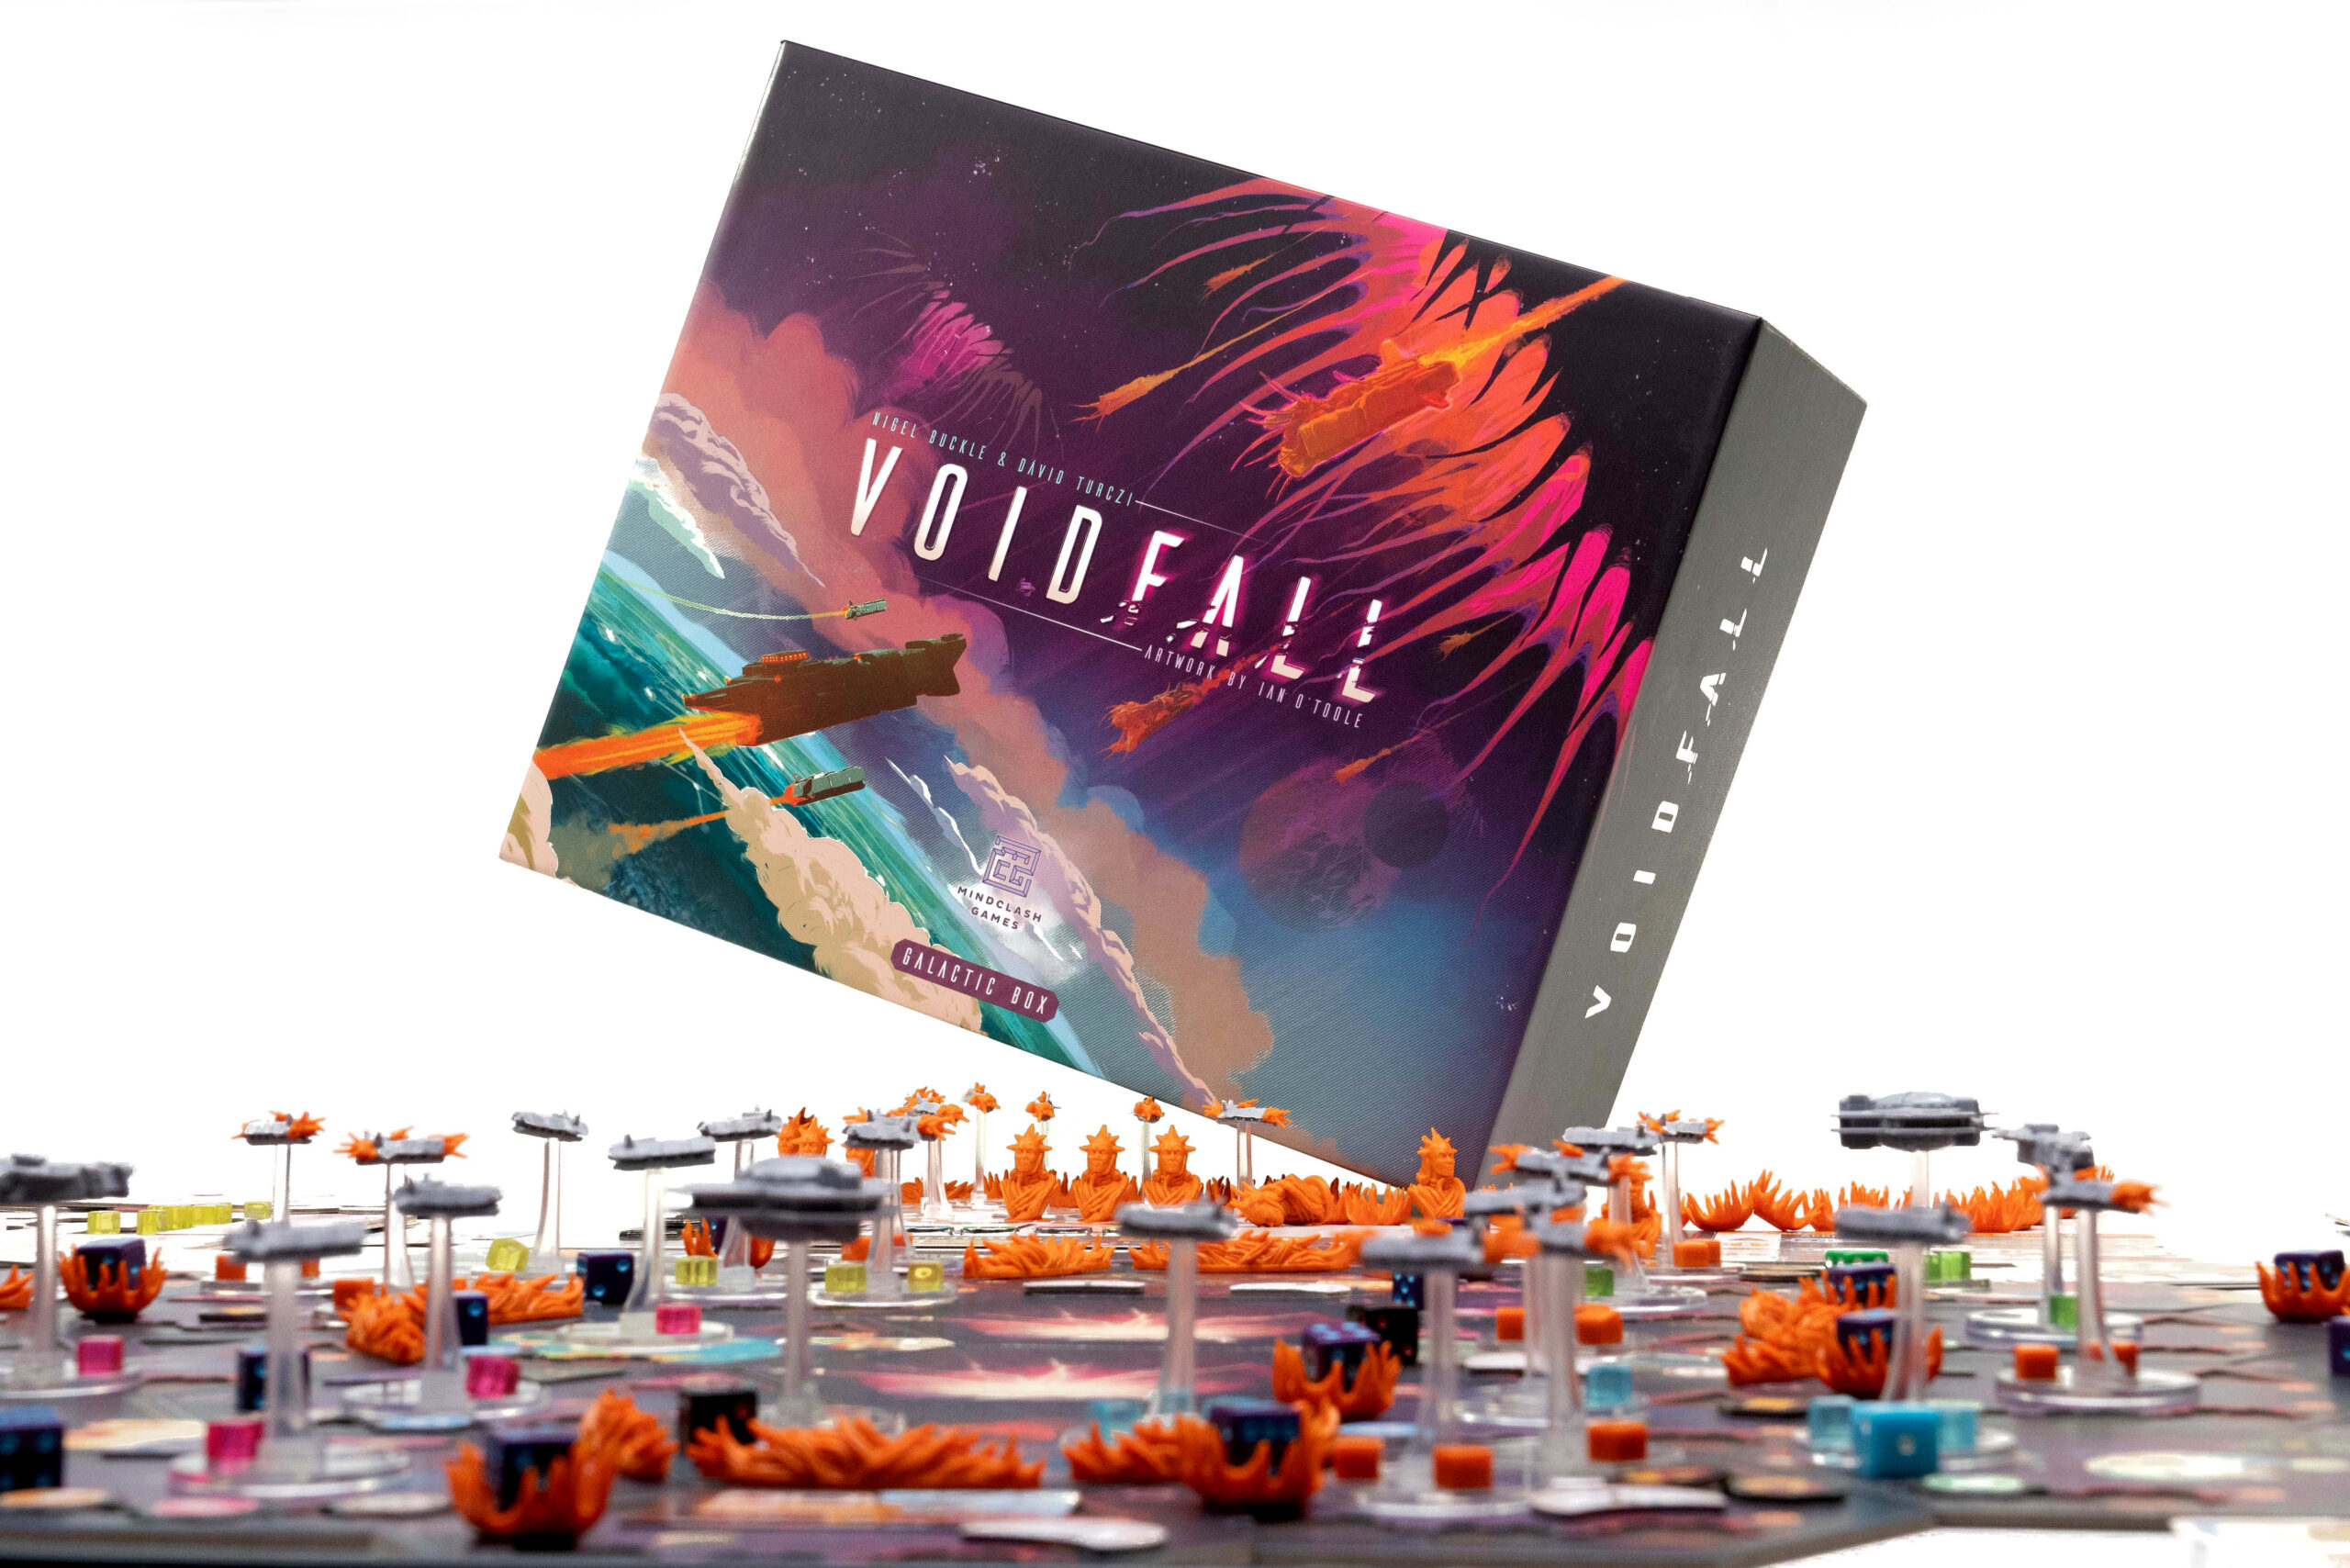 Voidfall – Galactic Box (English Edition) – Mindclash Games